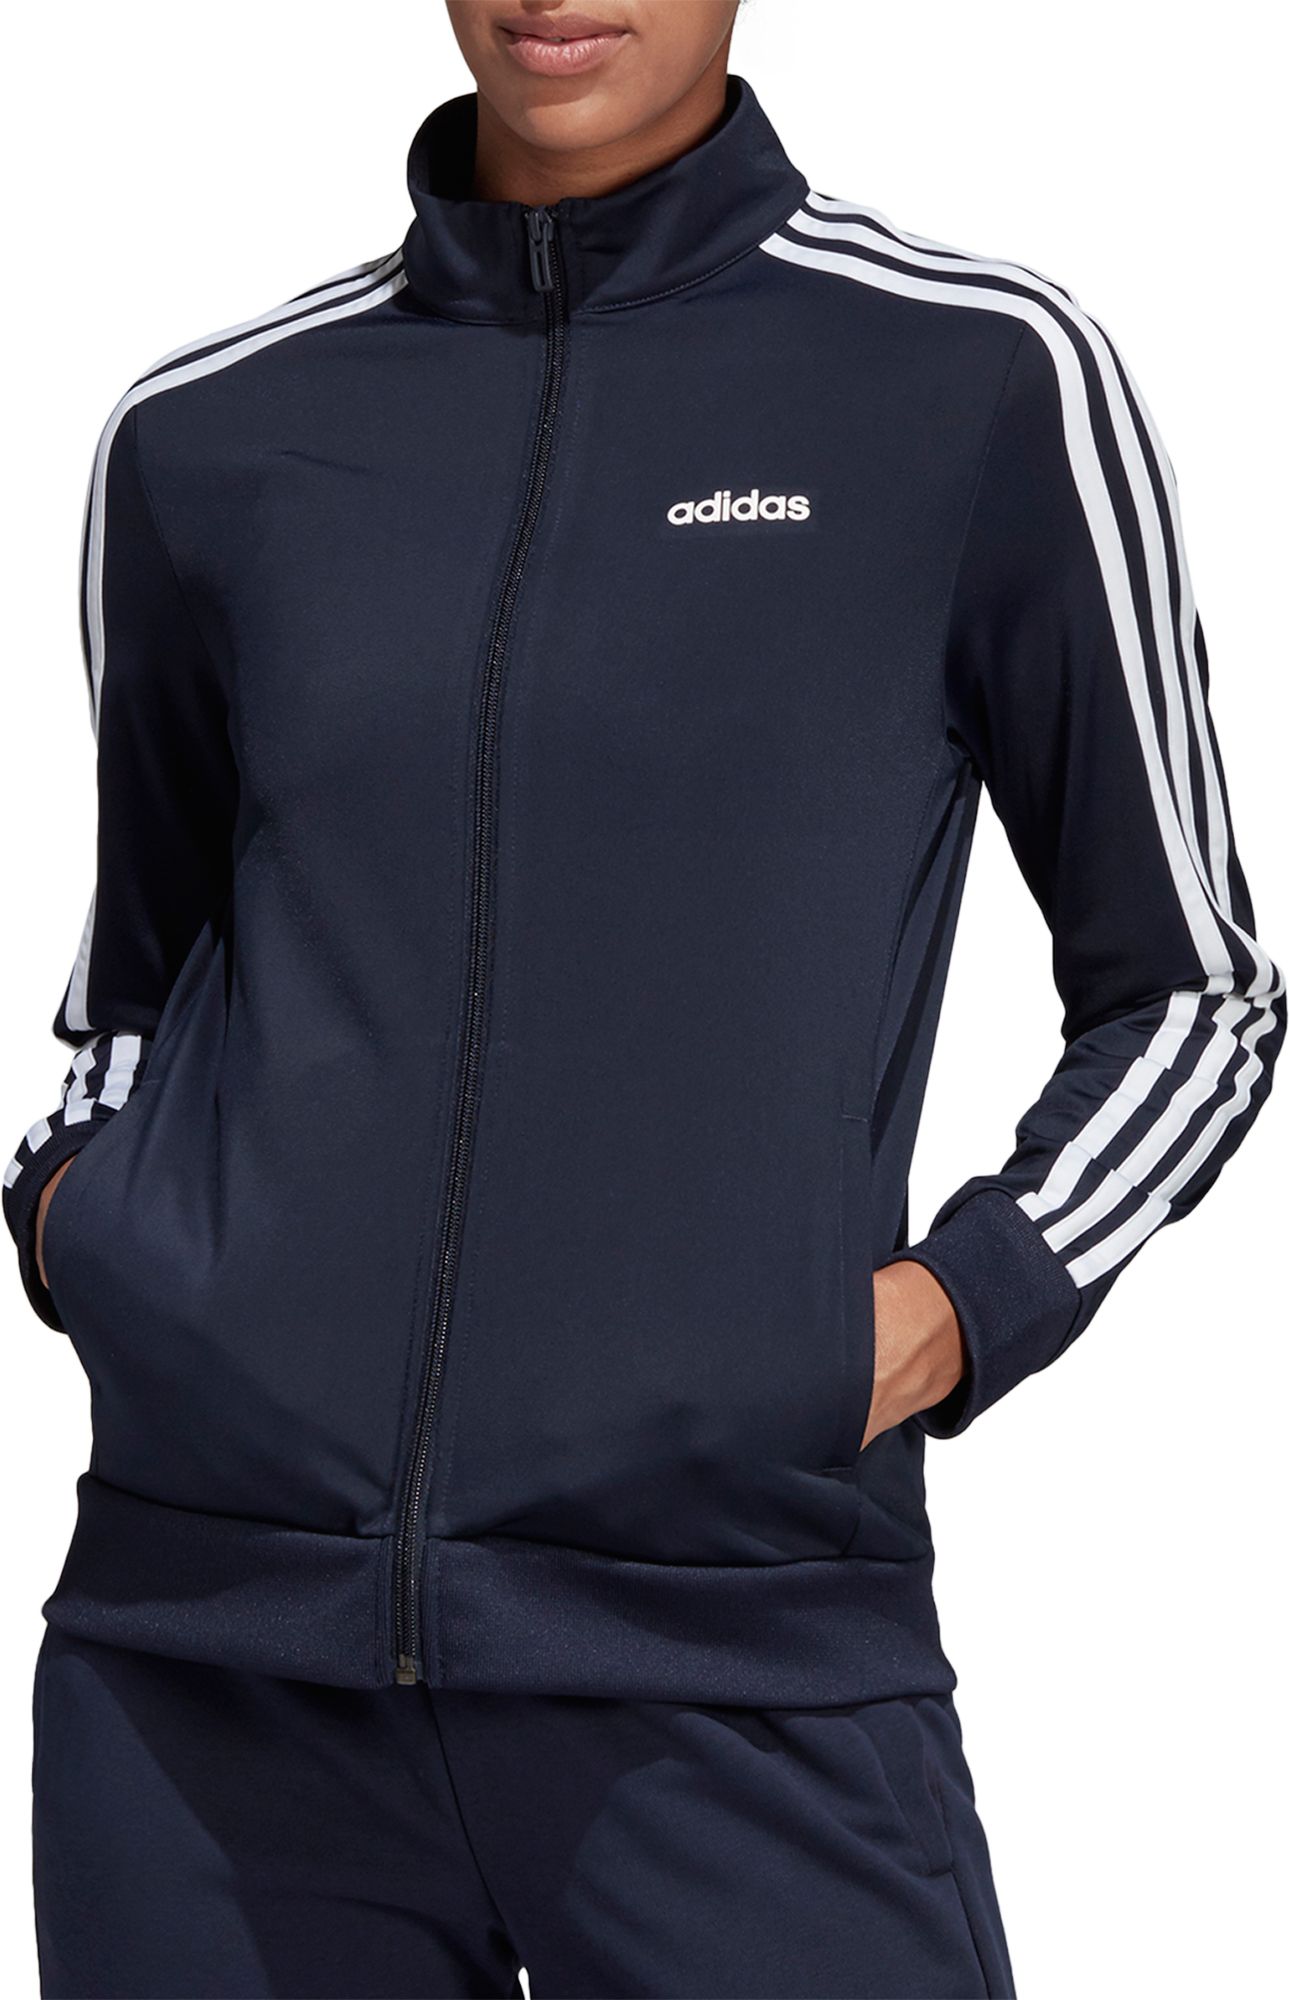 adidas track jacket for men